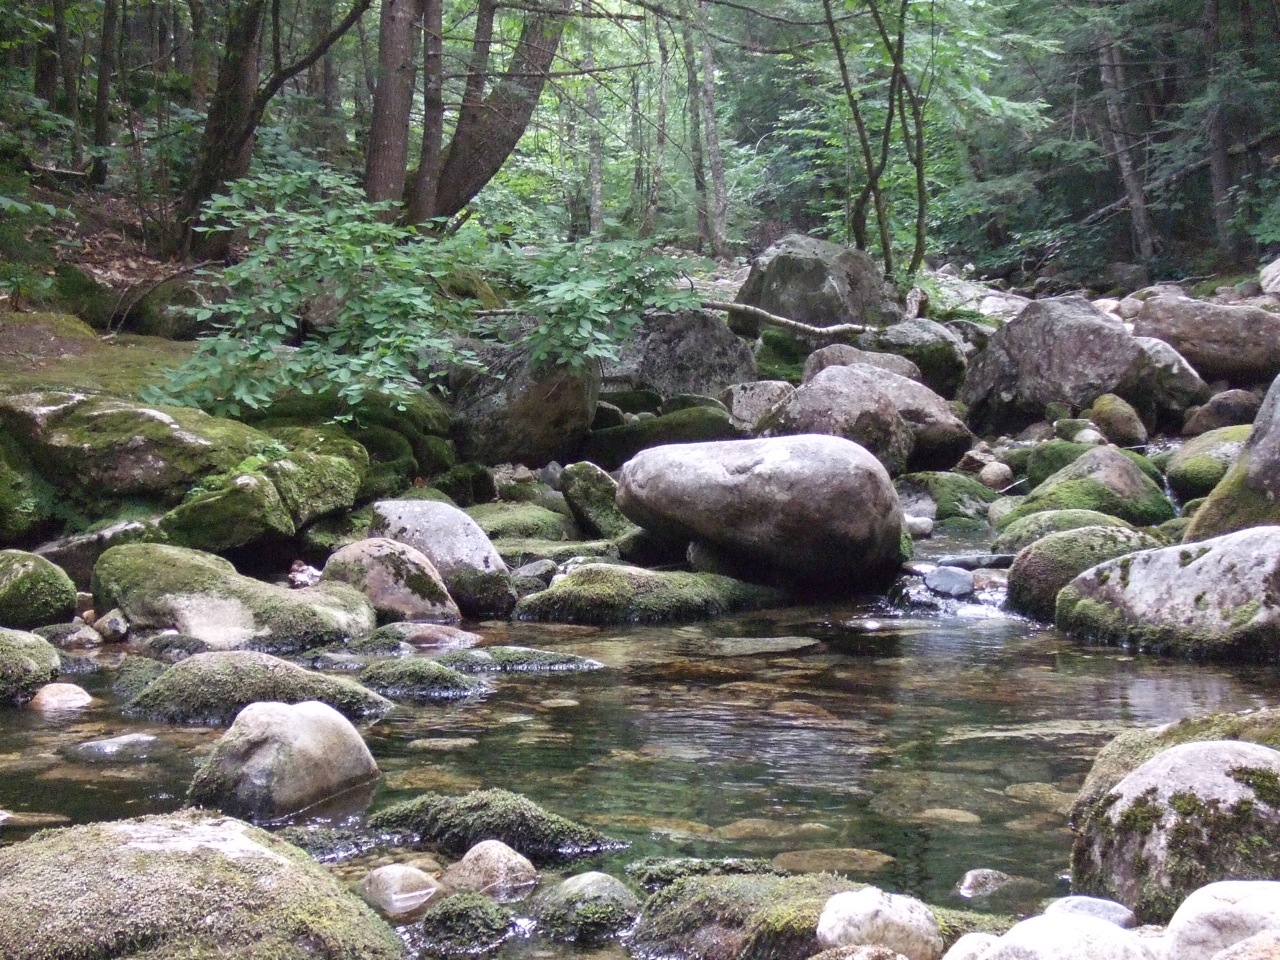 a quiet spot in a rock-strewn river